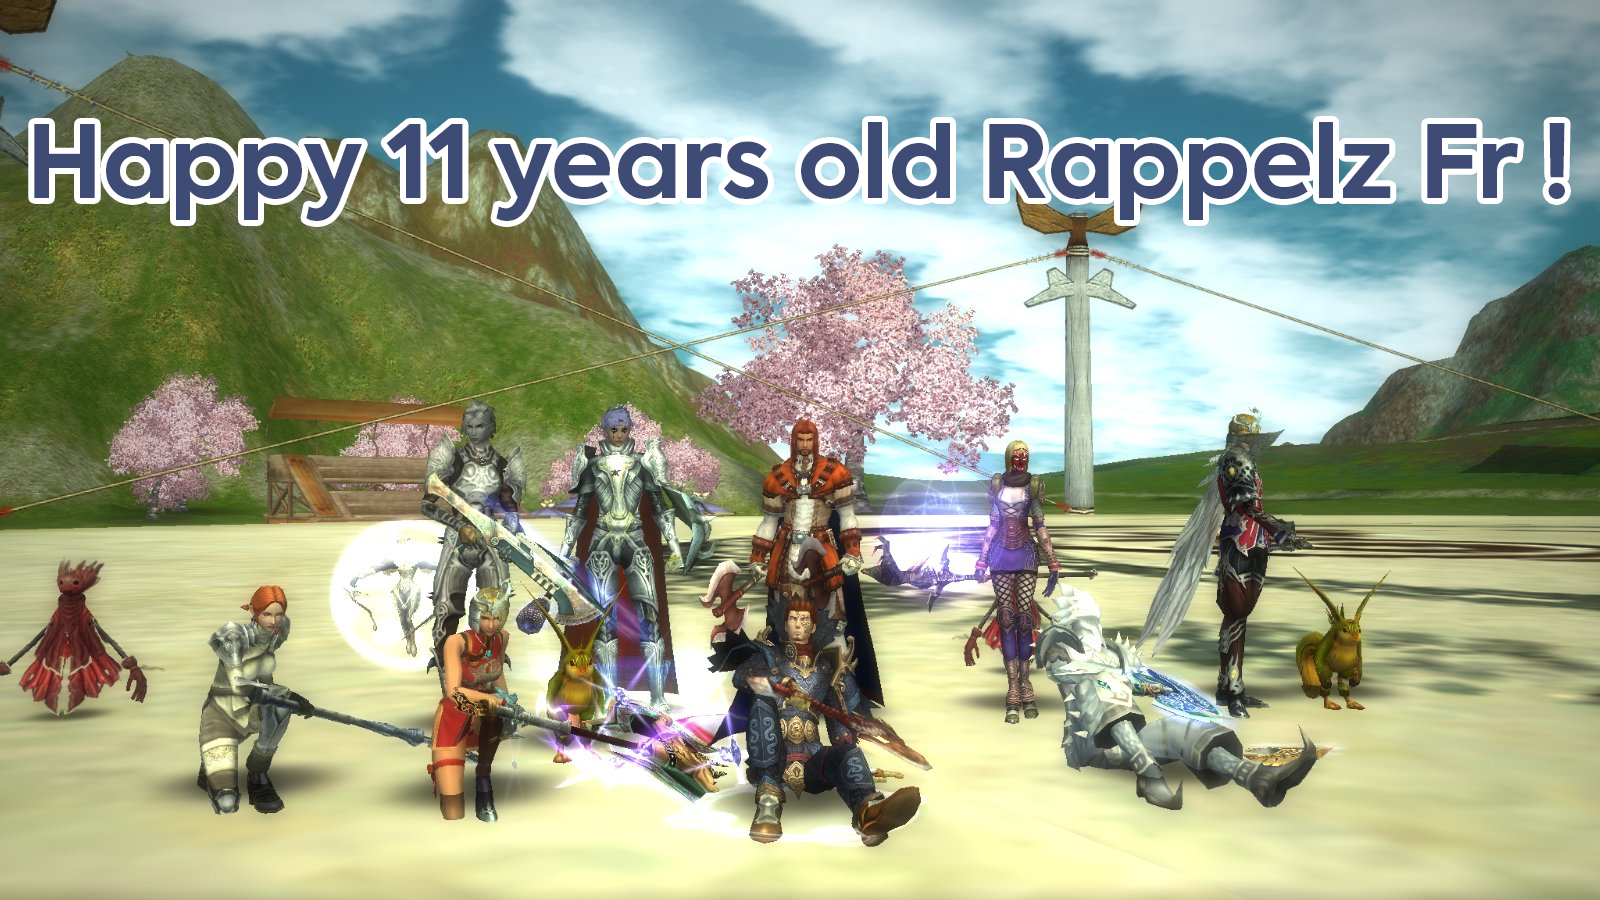 Rappelz fr celebrates its th anniversary